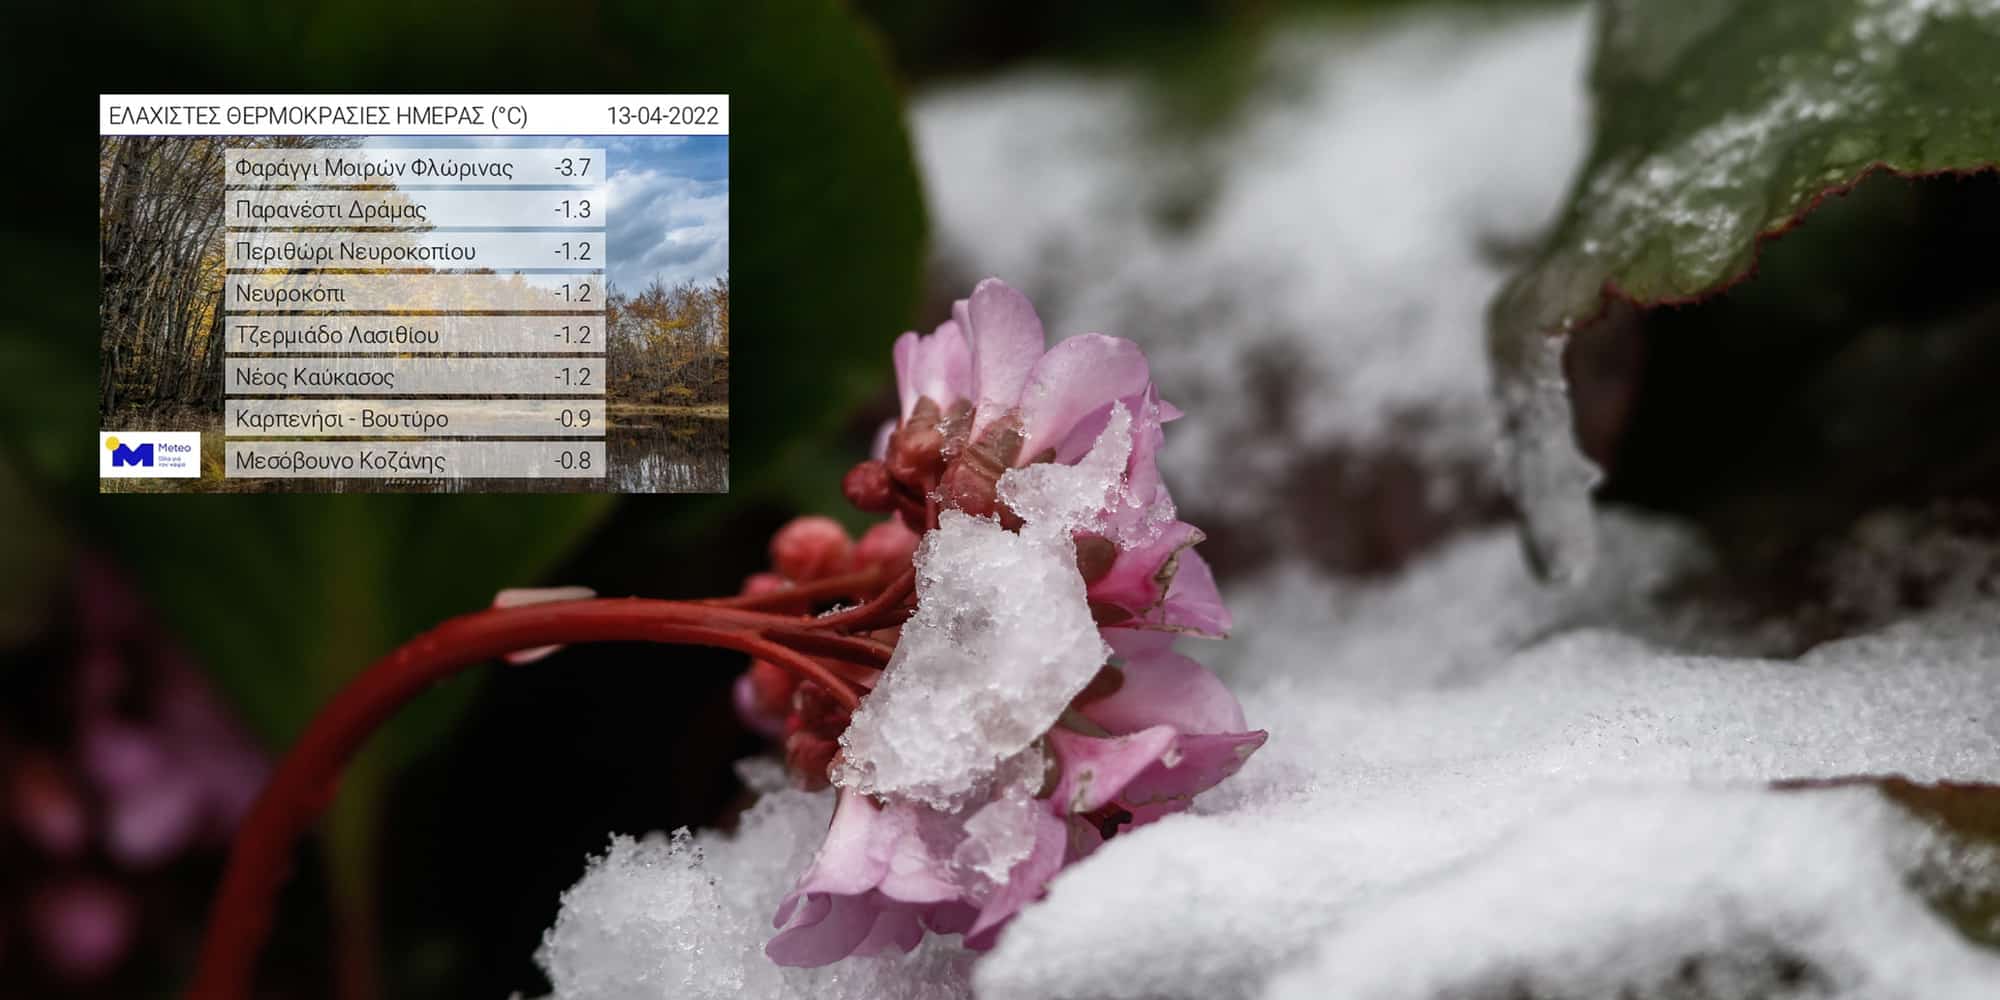 Meteo: Συνθήκες παγετού σήμερα το πρωί - Οι 6 περιοχές με τις χαμηλότερες θερμοκρασίες